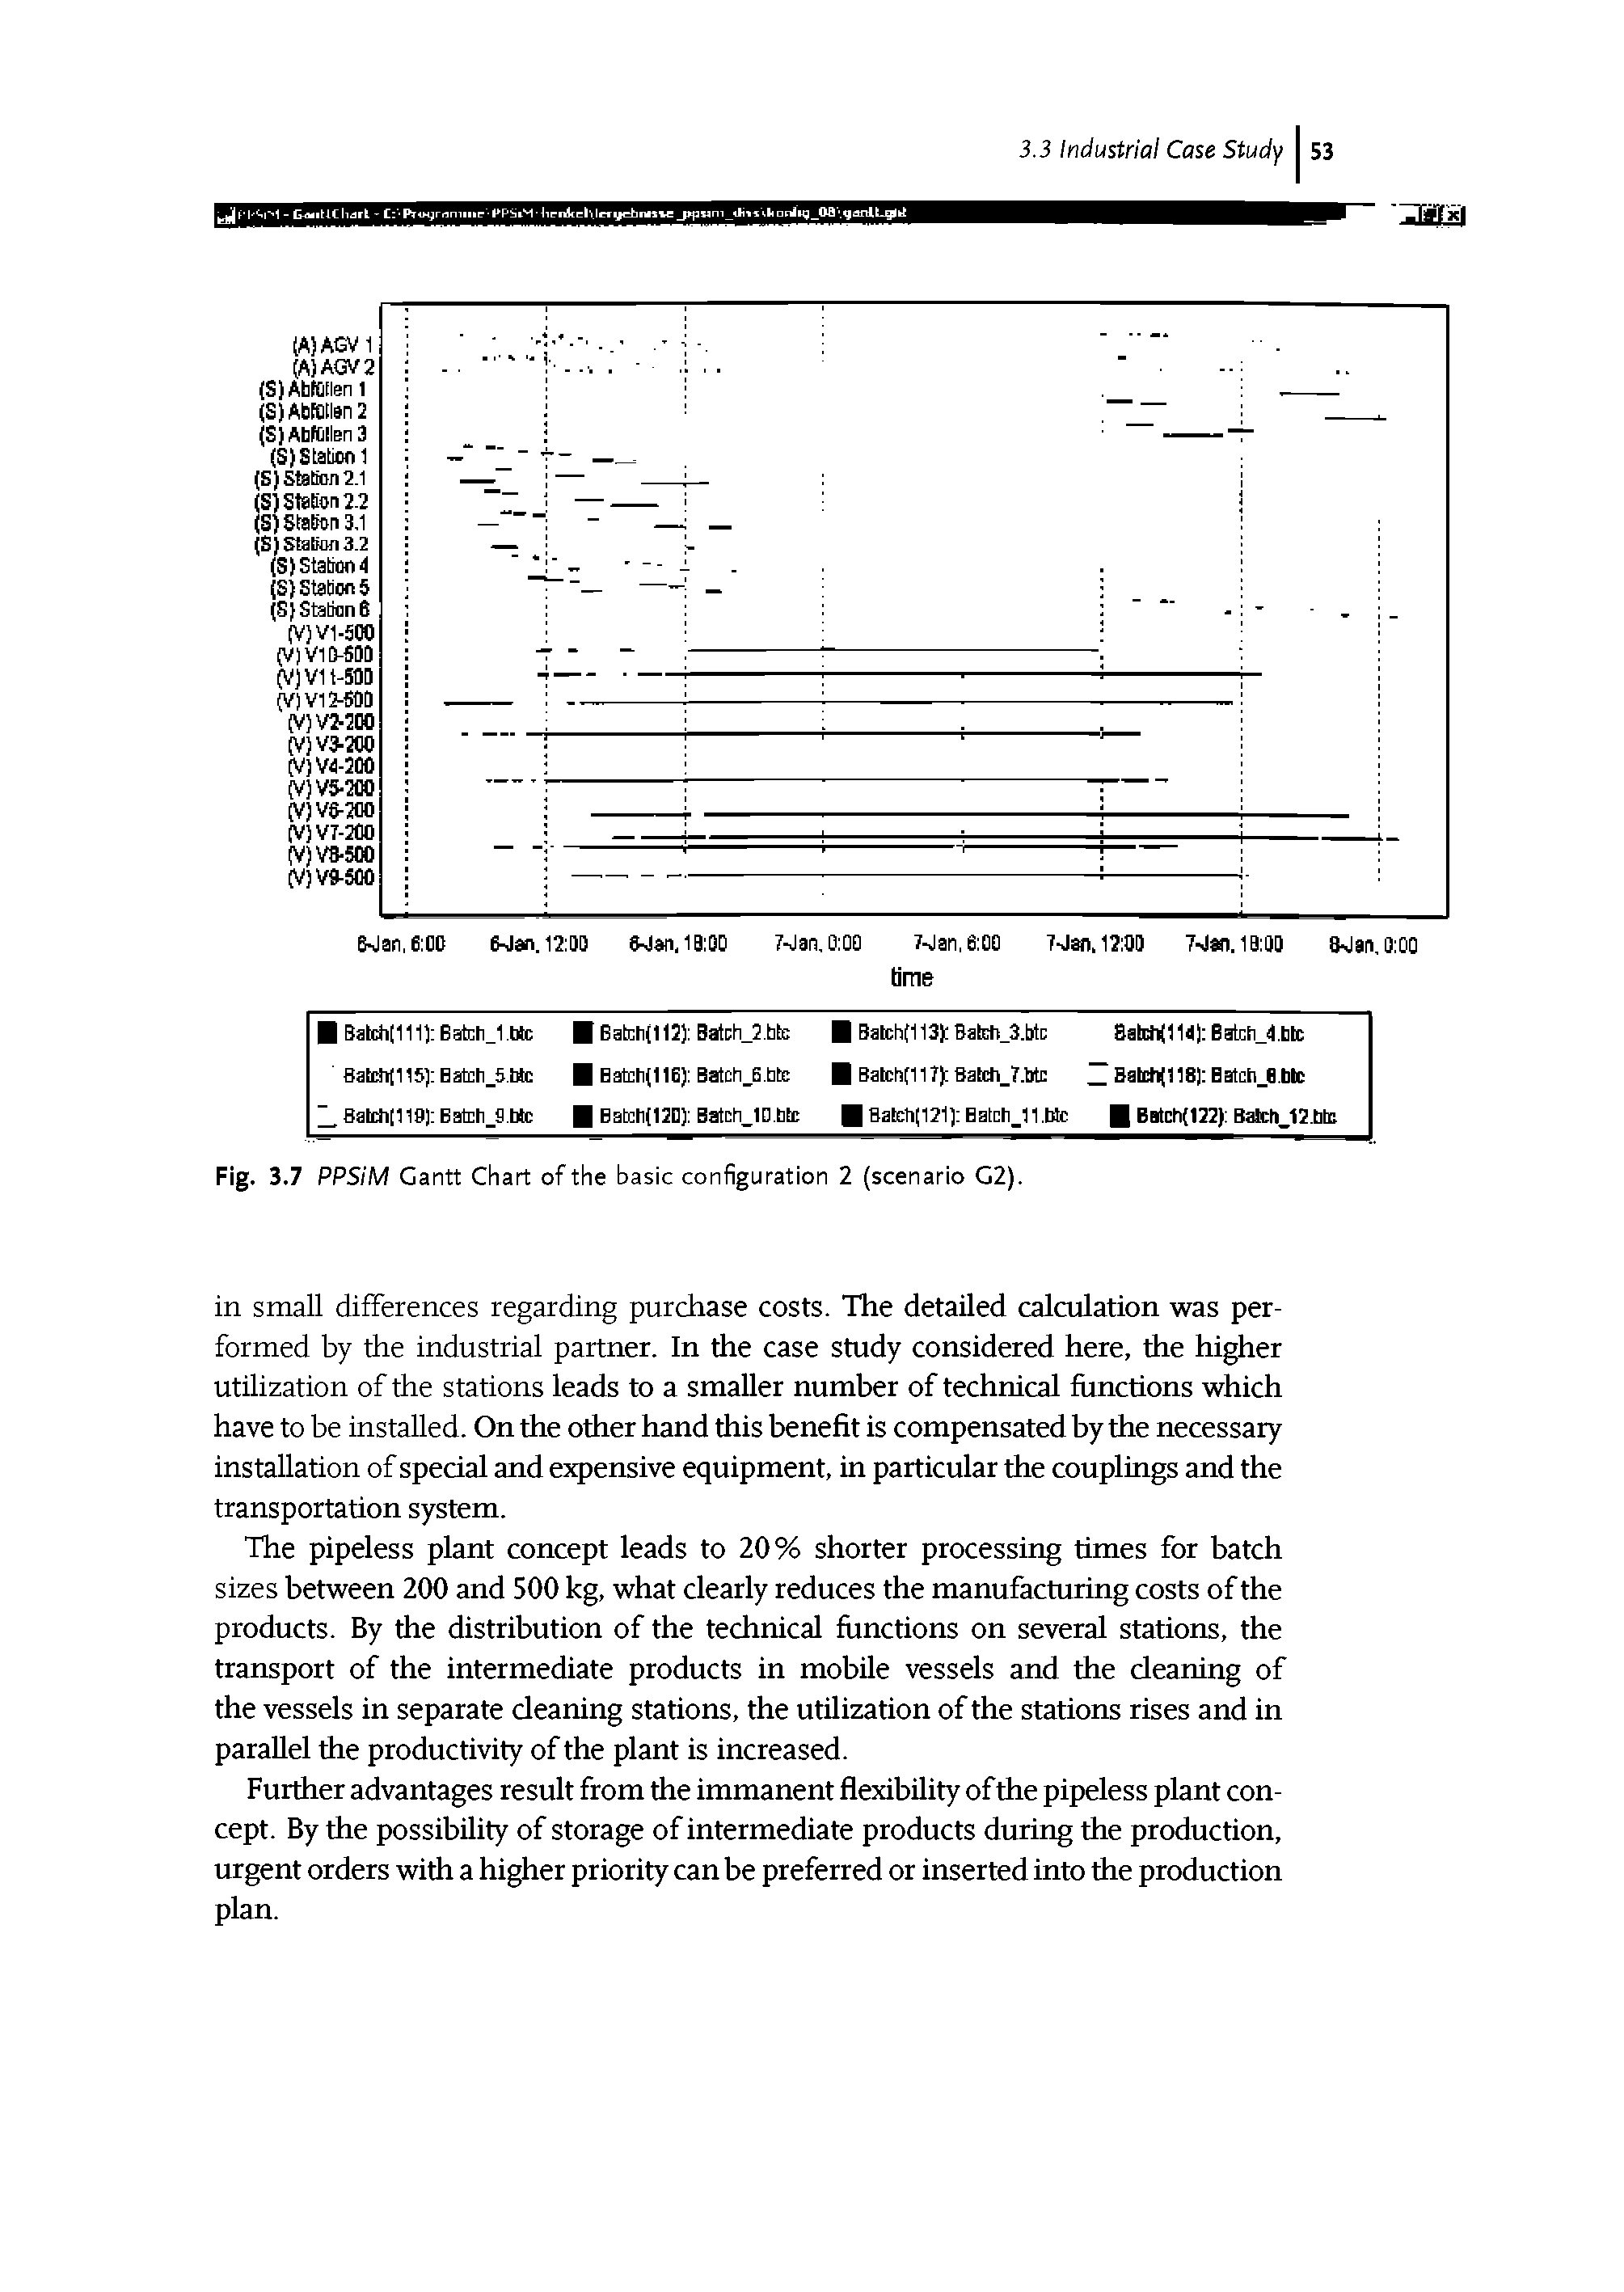 Fig. 3.7 PPSiM Gantt Chart of the basic configuration 2 (scenario G2).